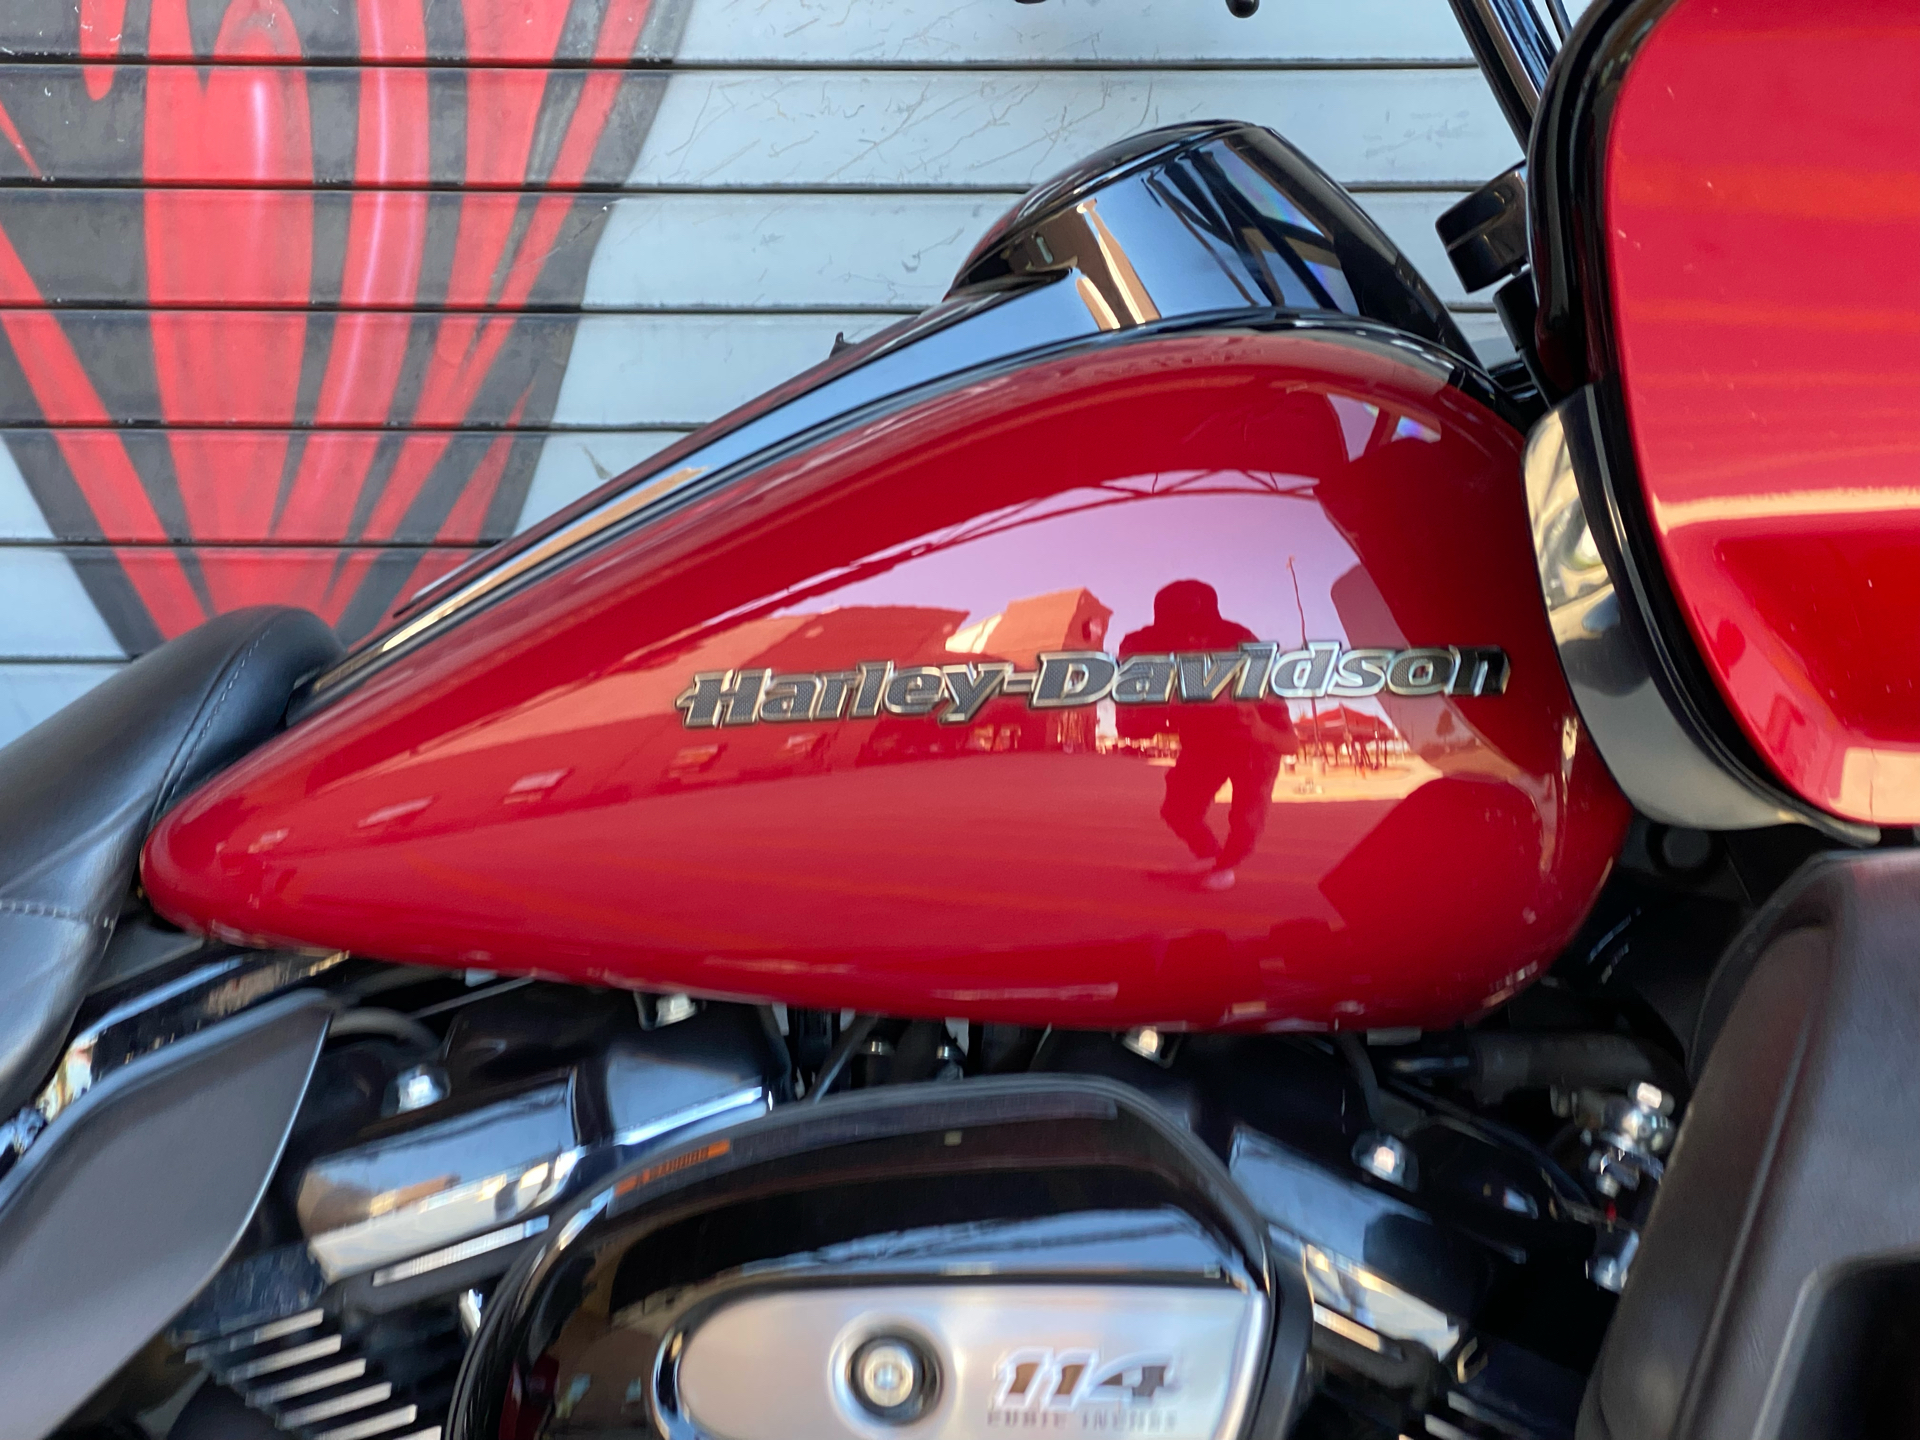 2020 Harley-Davidson Road Glide® Limited in Carrollton, Texas - Photo 5